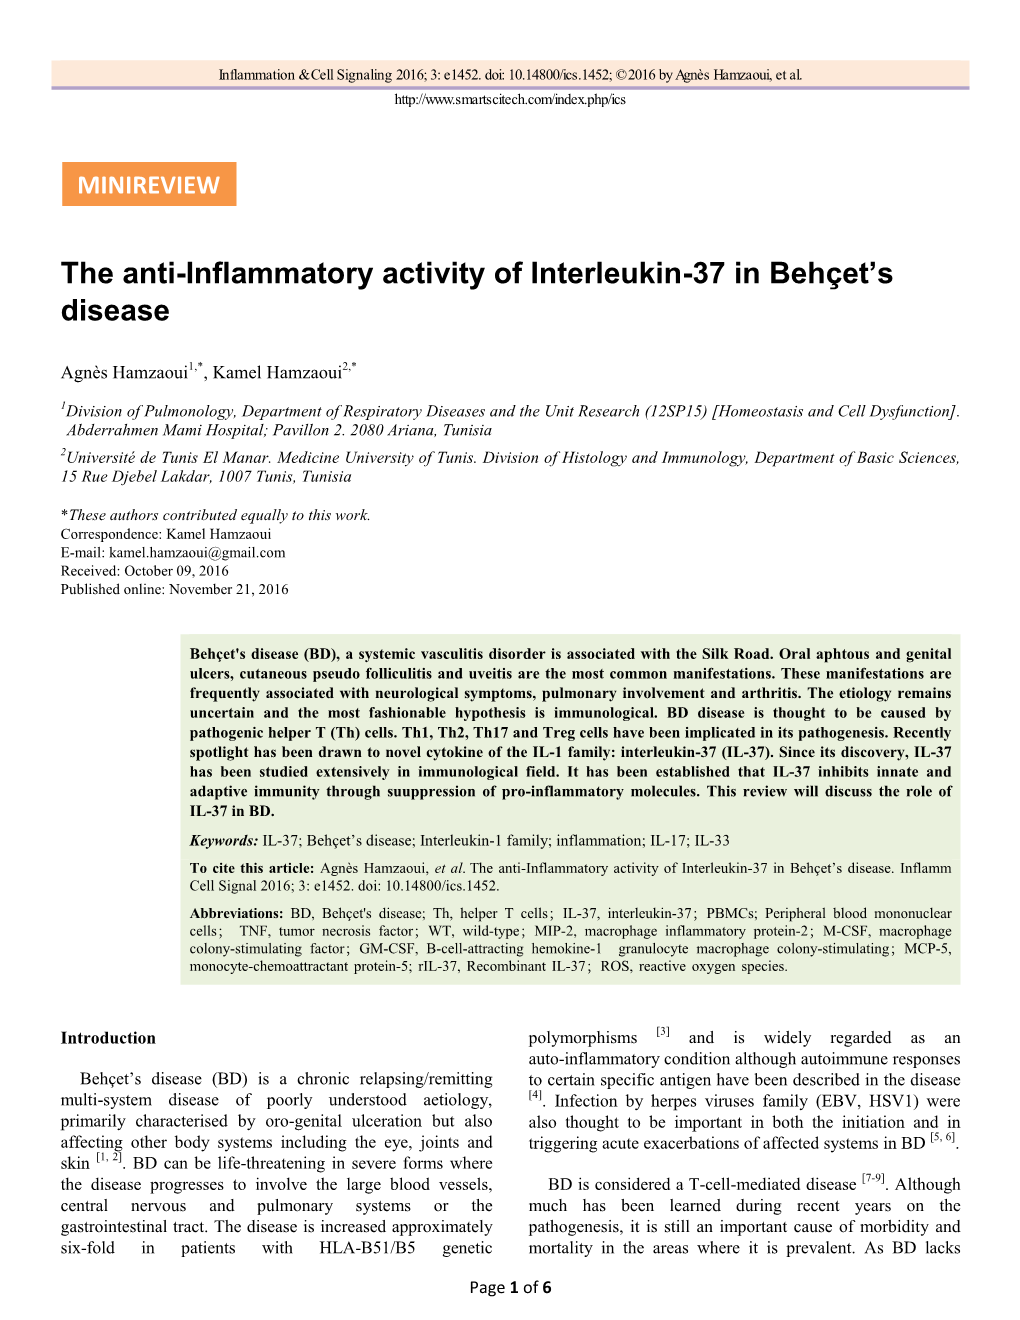 The Anti-Inflammatory Activity of Interleukin-37 in Behçet's Disease